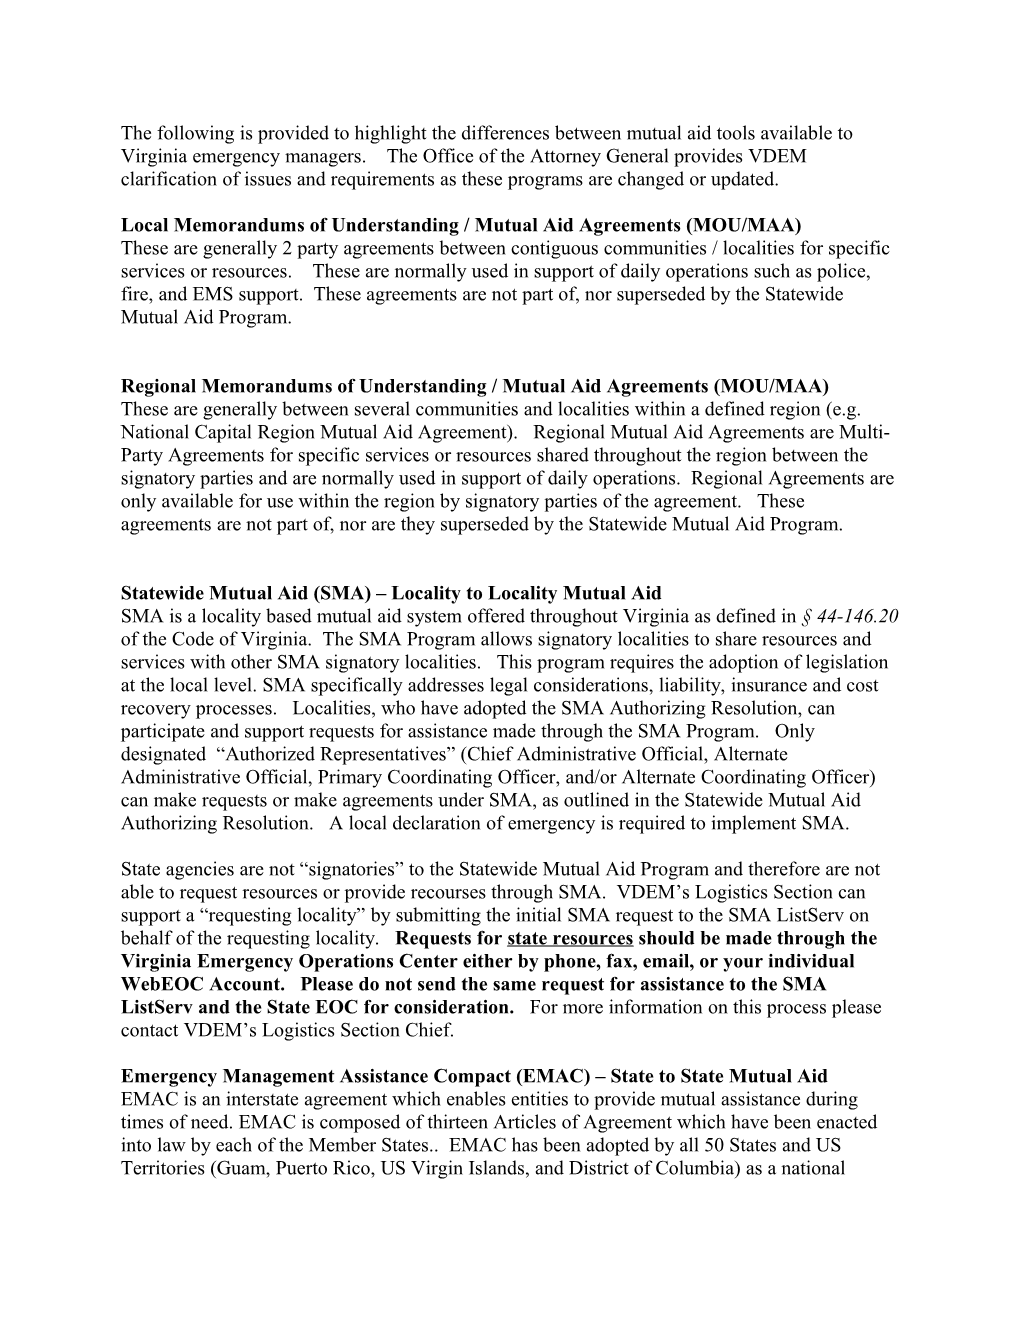 Local Memorandums of Understanding / Mutual Aid Agreements (MOU/MAA)